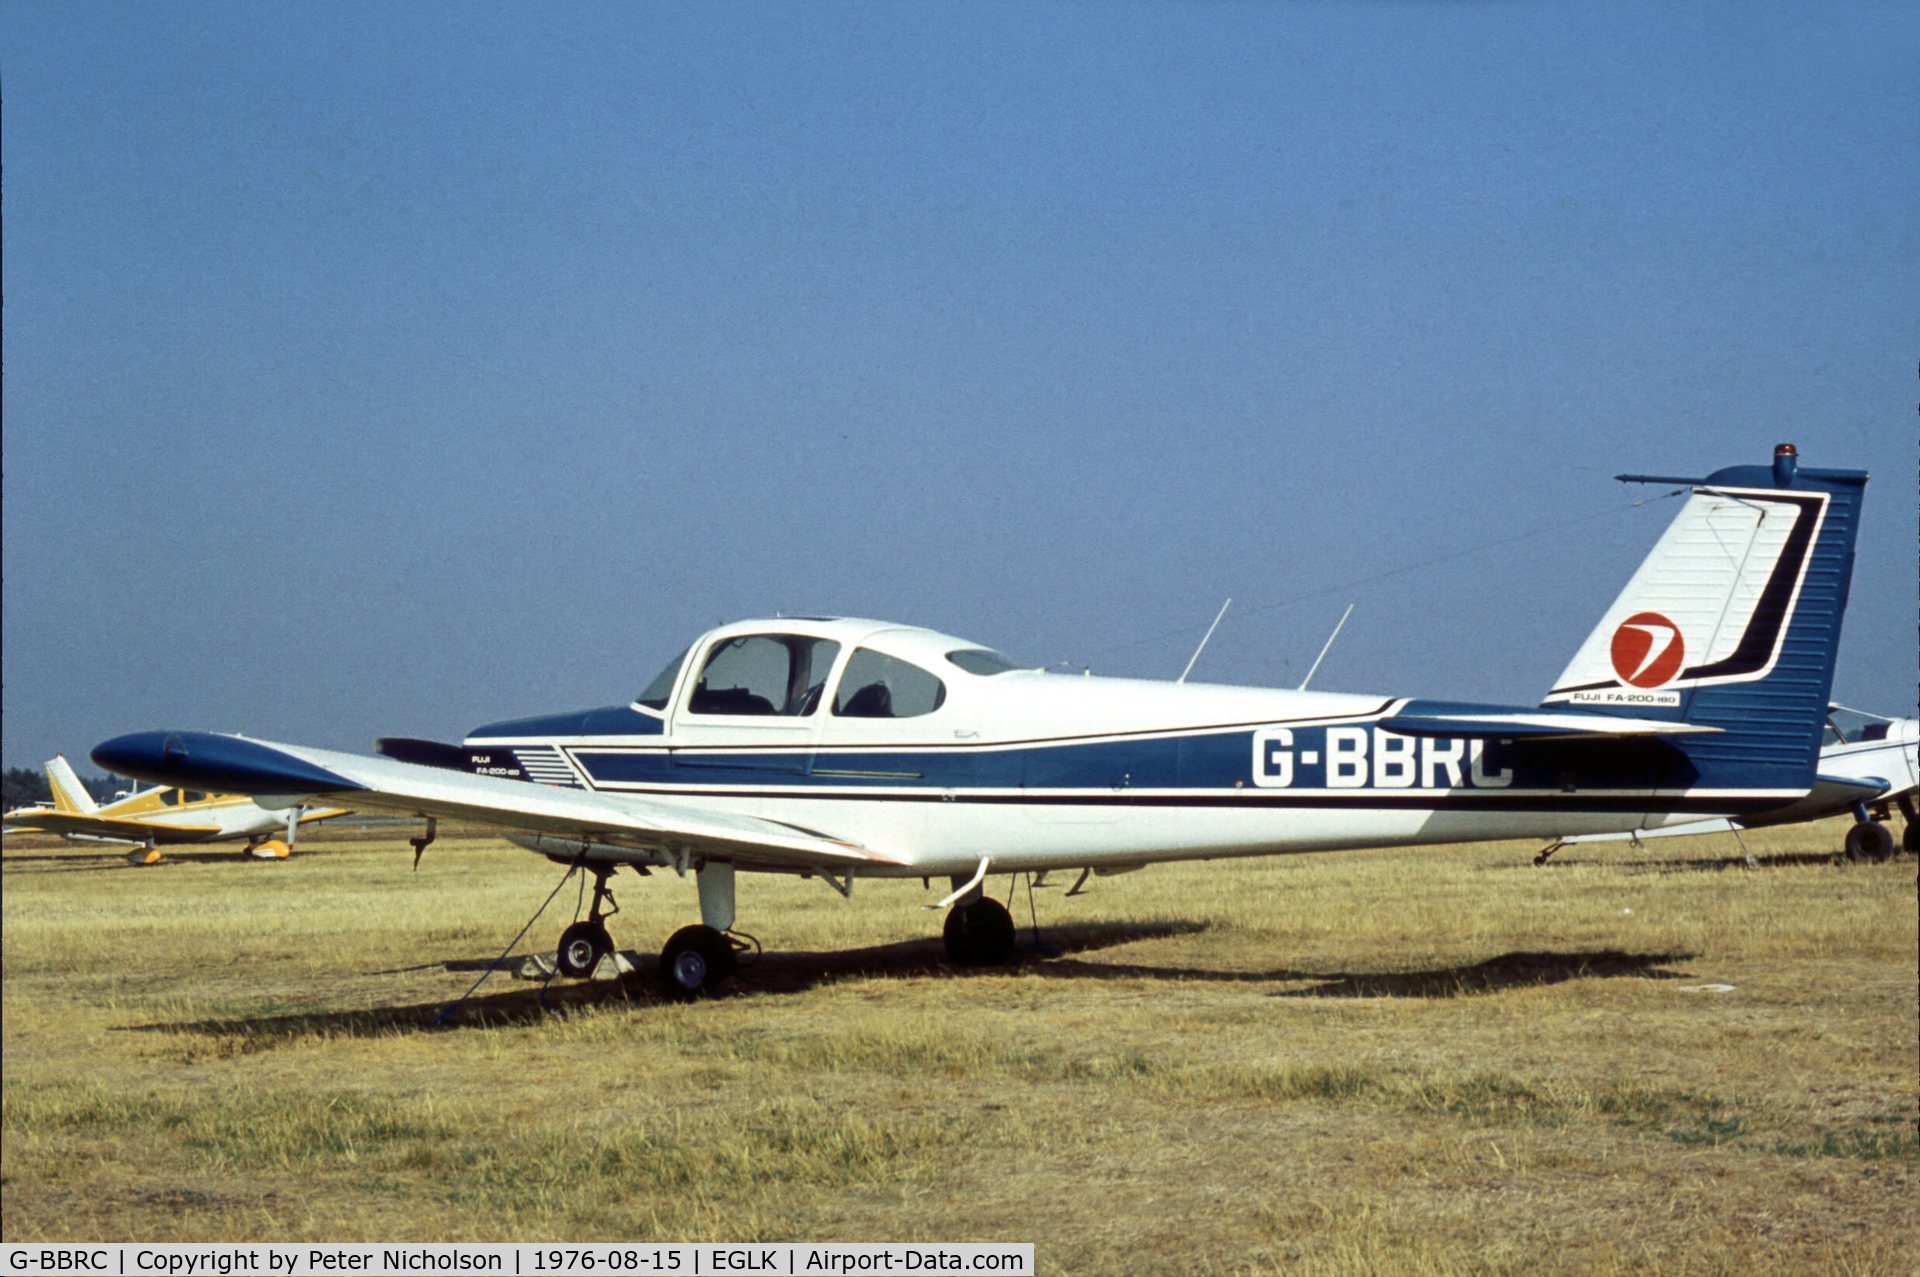 G-BBRC, 1973 Fuji FA-200-180 Aero Subaru C/N 235, Attended the 1976 Blackbushe Fly-in.